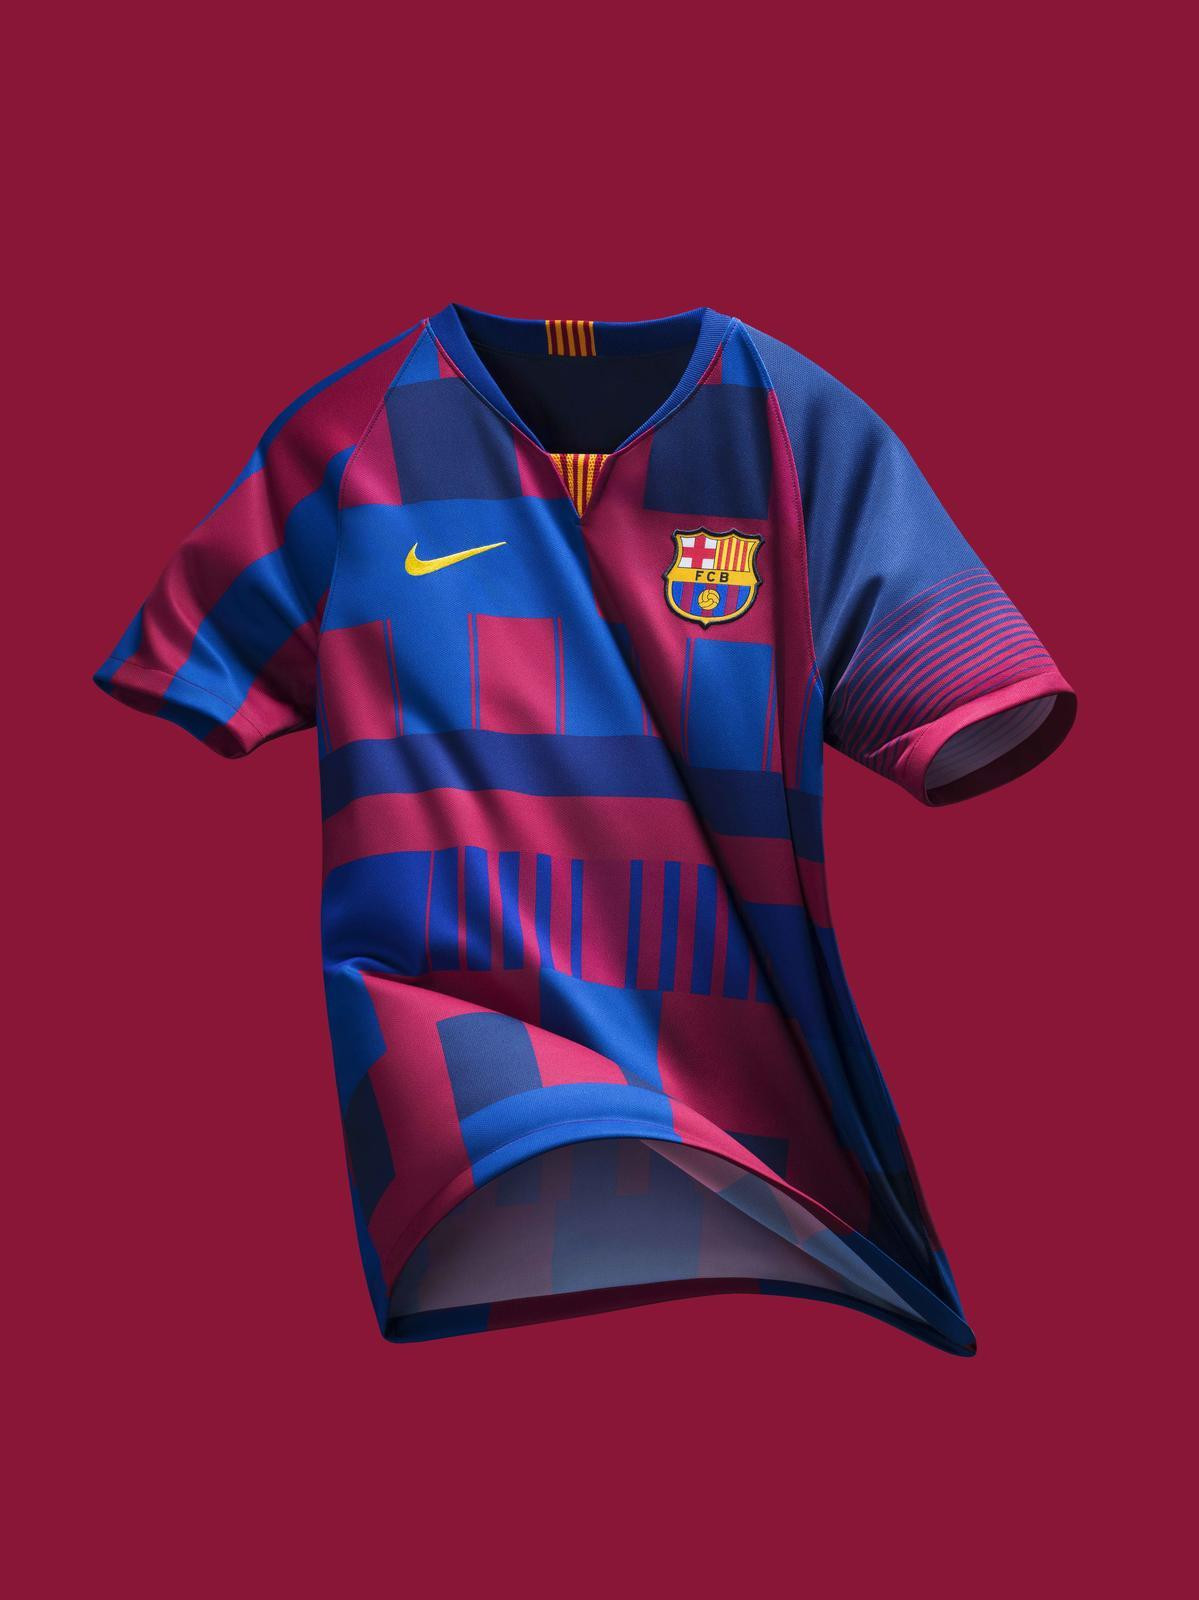 Vista general de la camiseta Barça x Nike 20th Anniversary / Nike